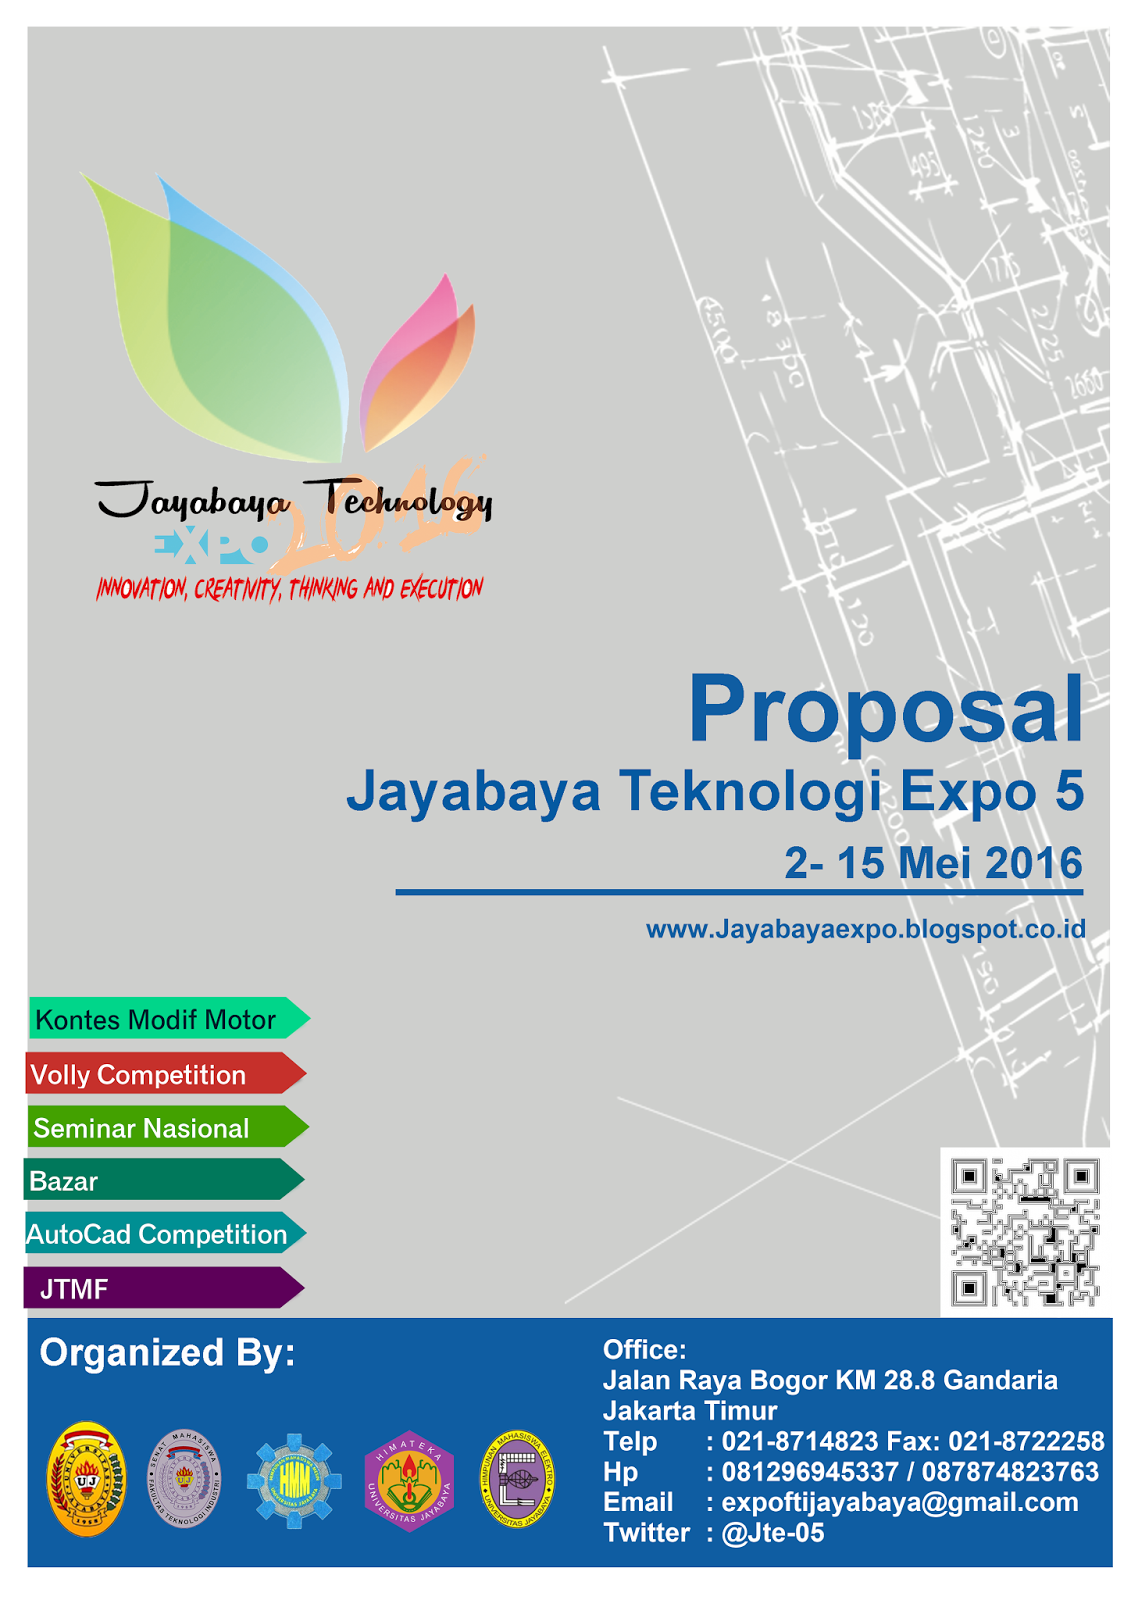 Jayabaya Teknologi Expo 2016 Proposal Digital